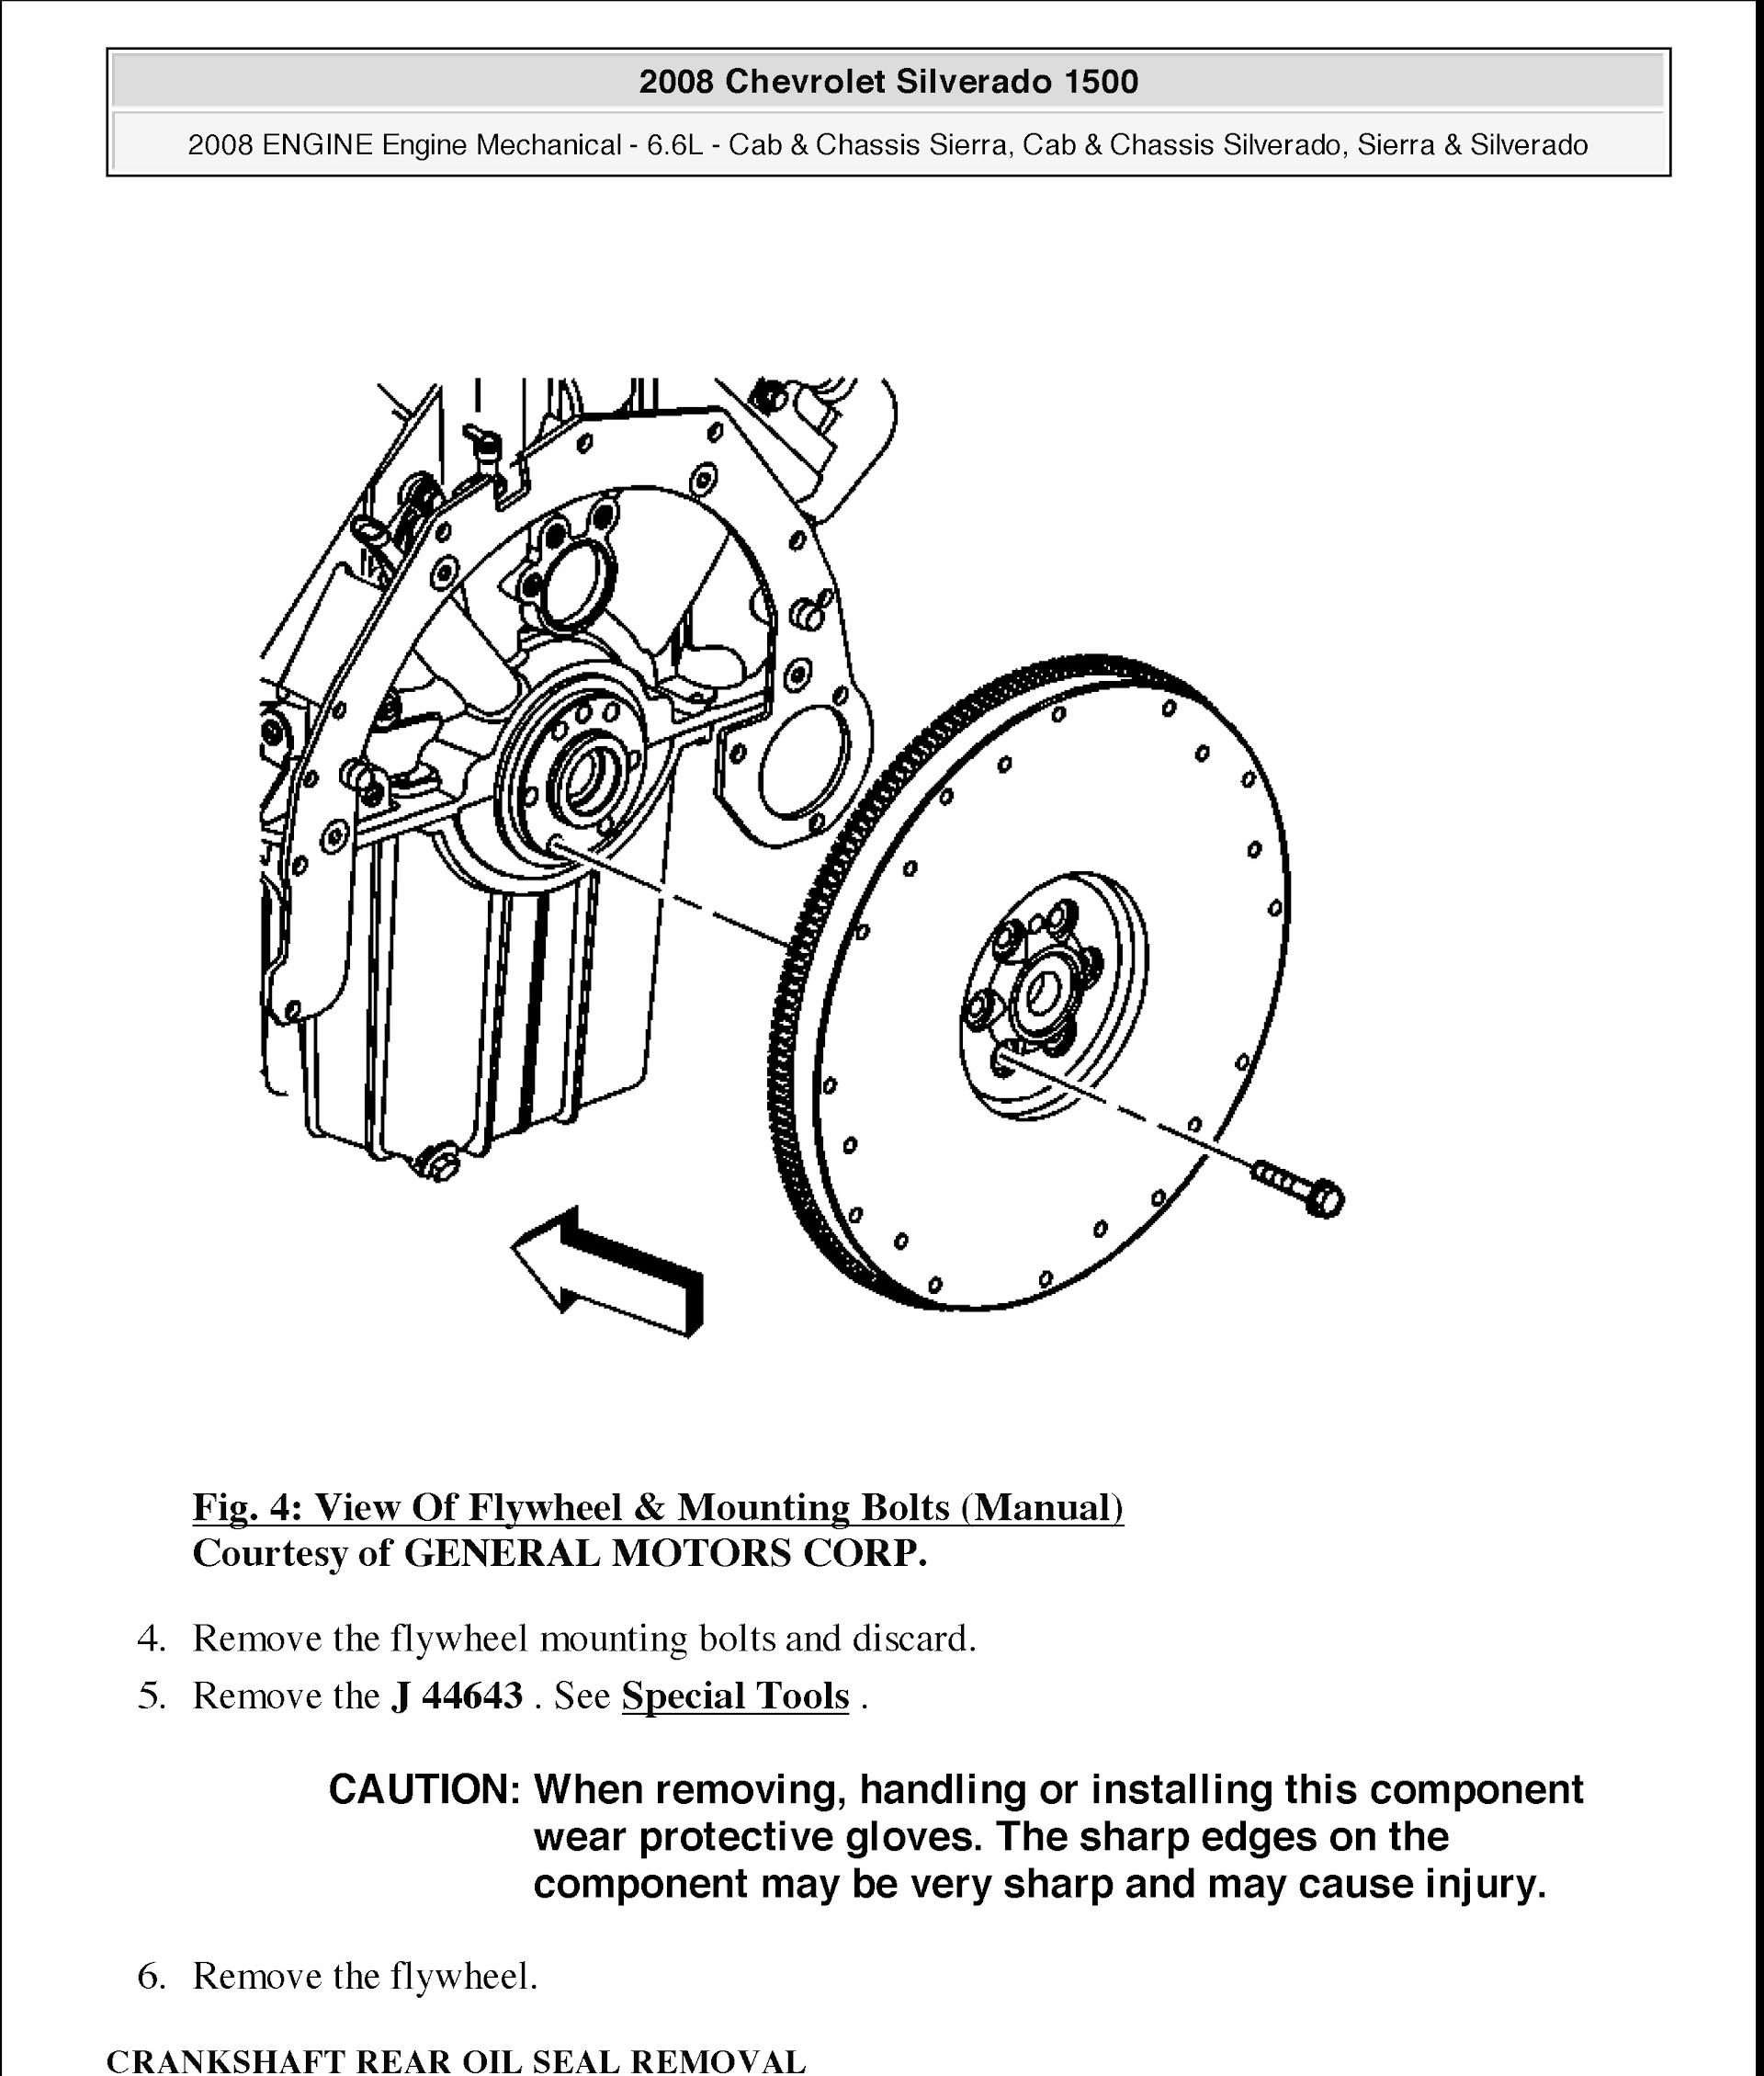 Chevrolet Silverado 1500 Repair Manual, Engine Mechanical 6.6L